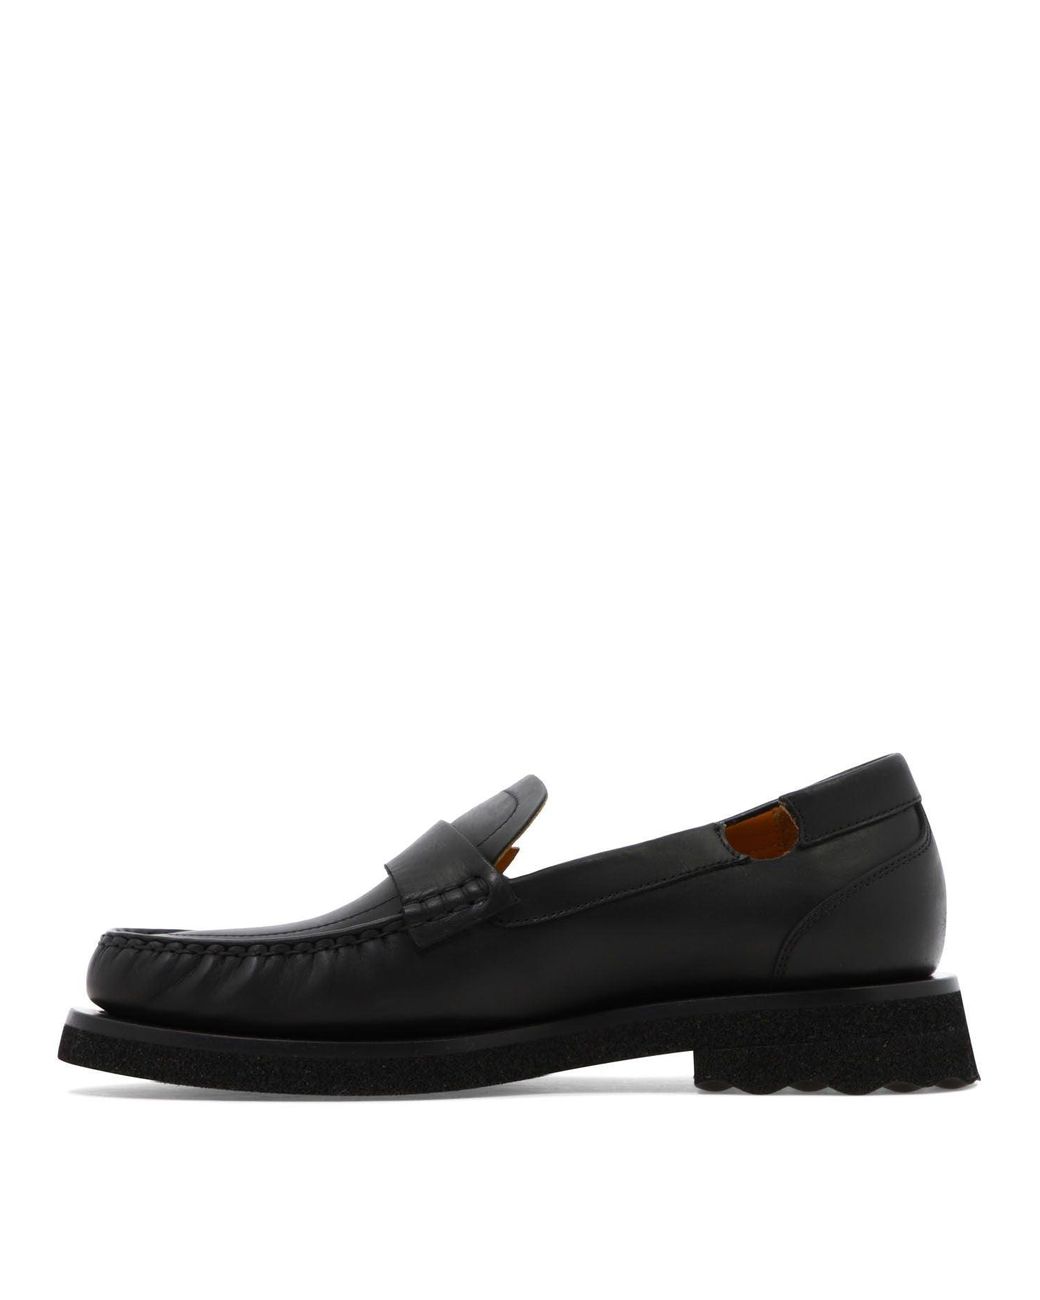 Off-White c/o Virgil Abloh Sponge Meteor Leather Loafers in Black for Men Mens Shoes Slip-on shoes Loafers 